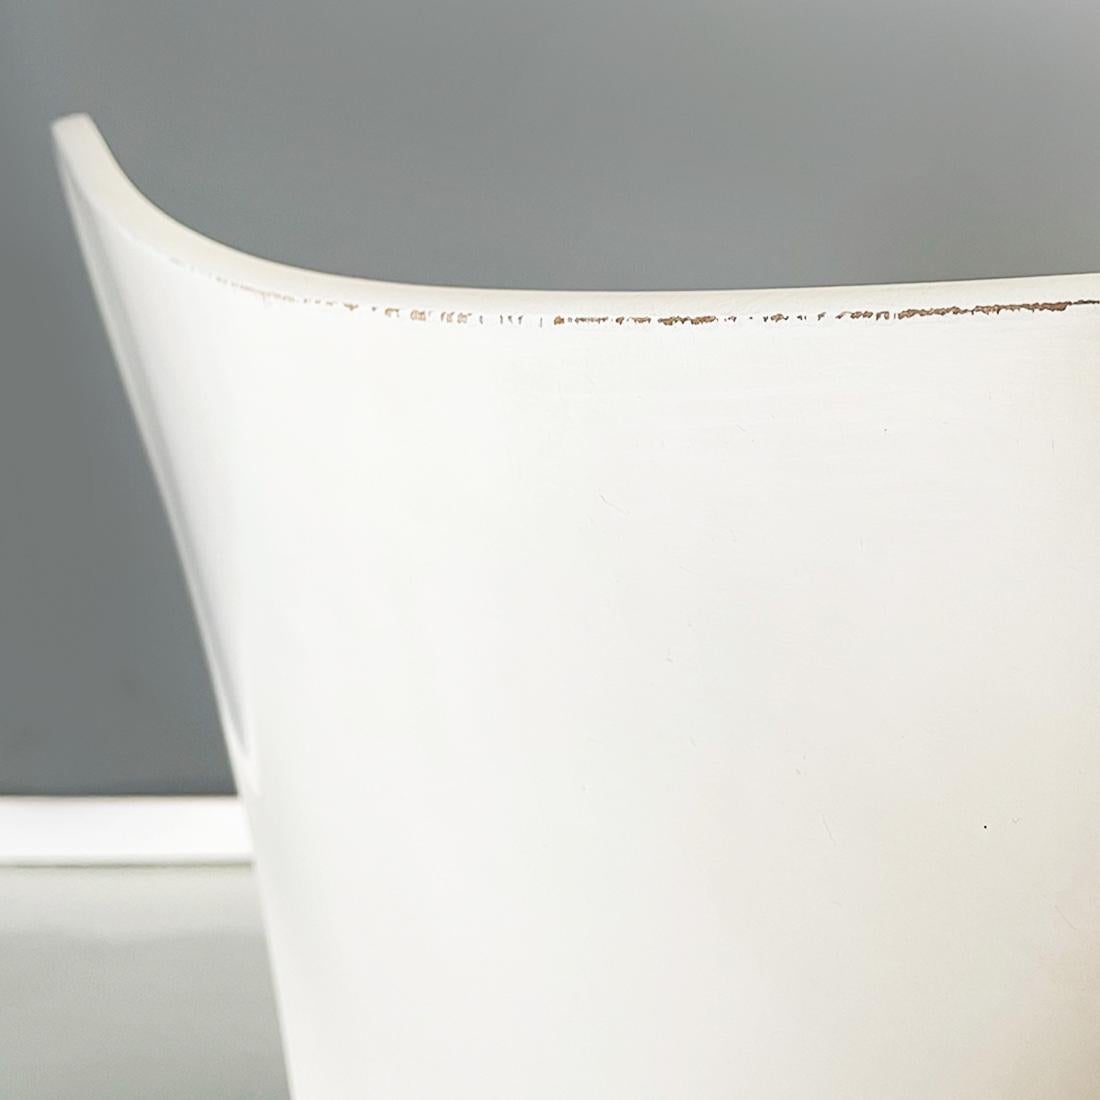 Steel Danish Modern White Chairs of Series 7 by Arne Jacobsen for Fritz Hansen, 1970s For Sale